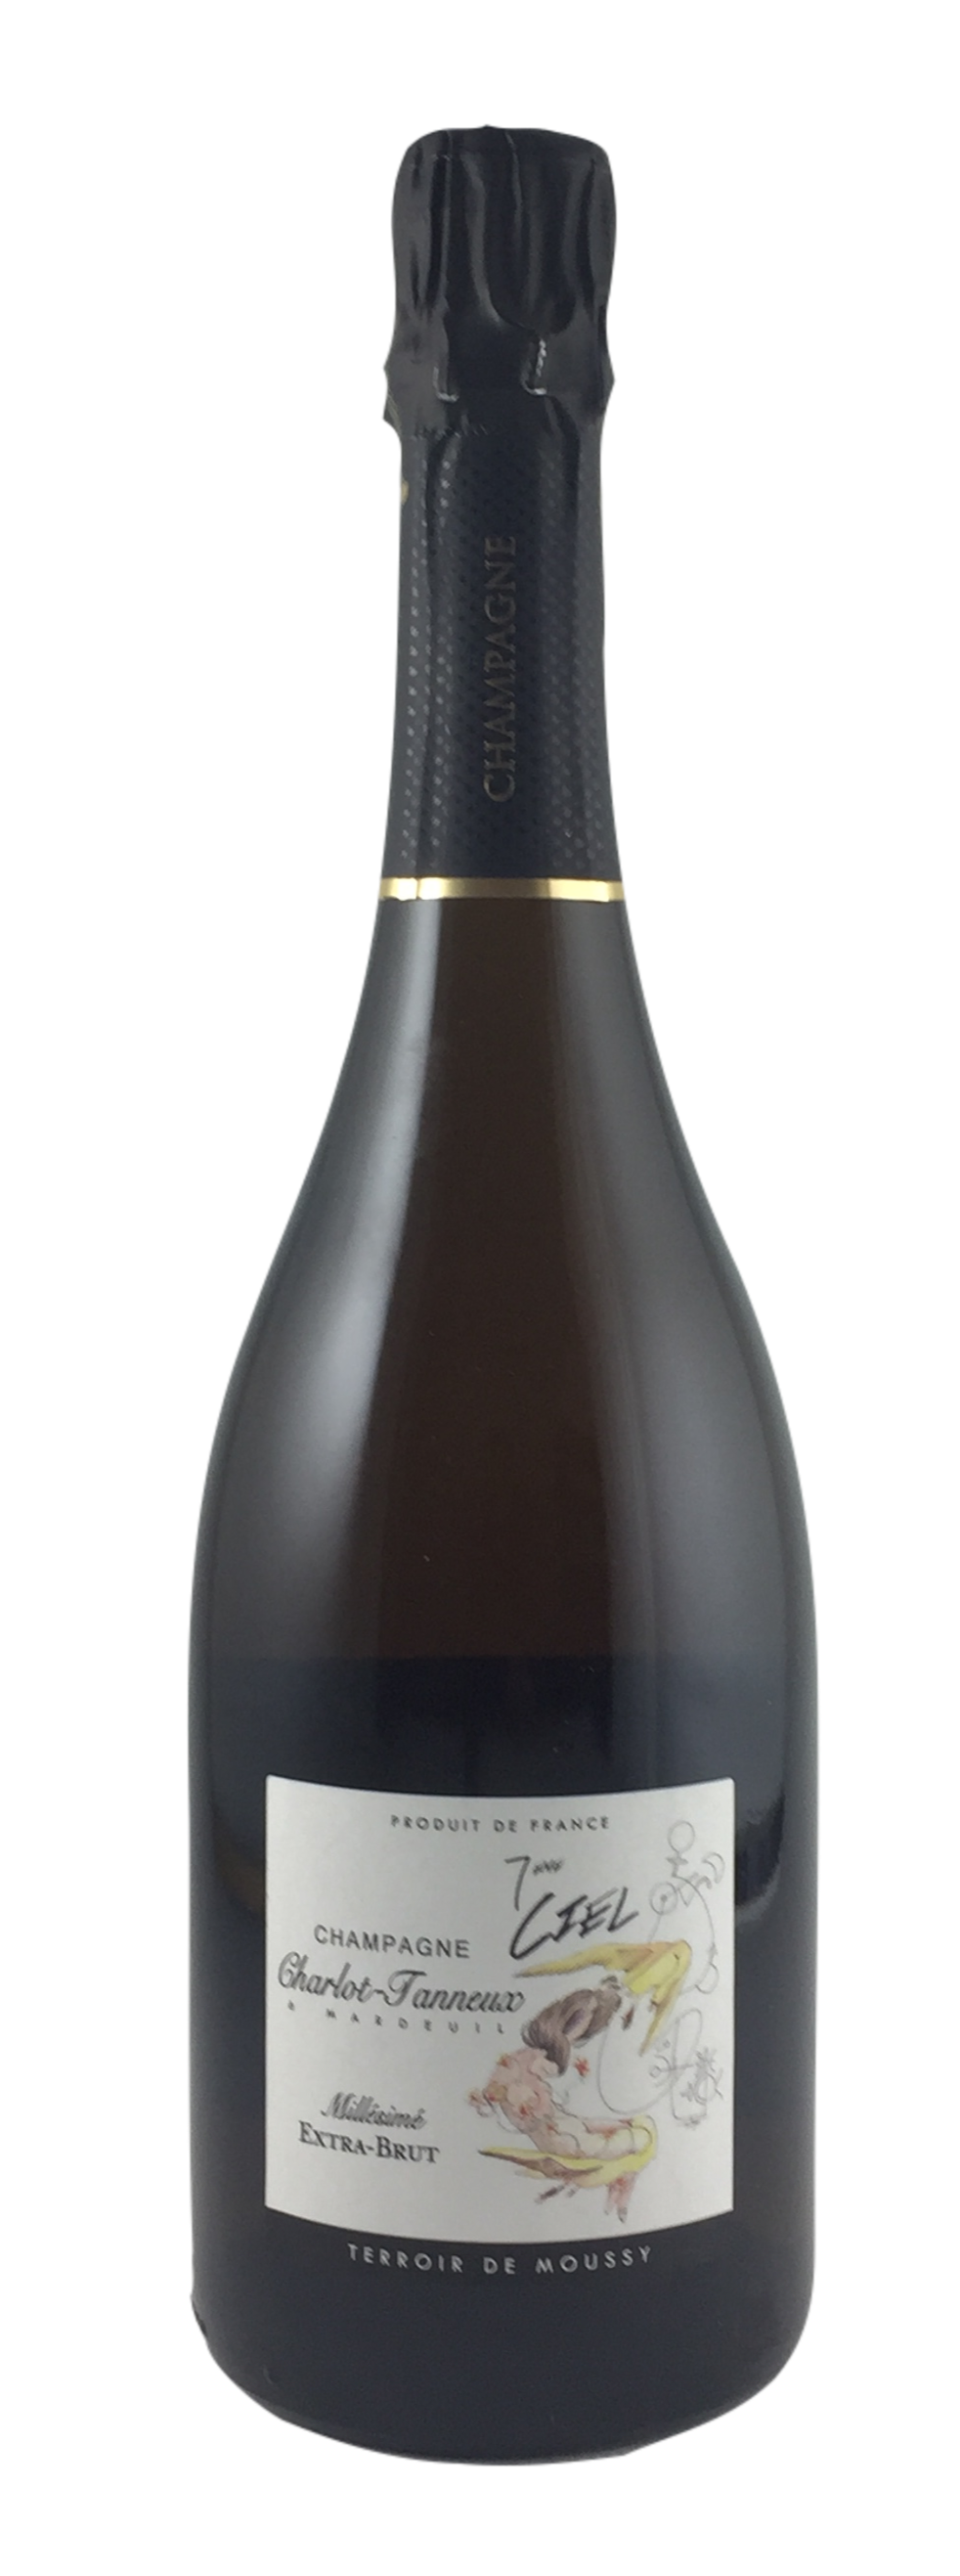 Champagne Charlot Tanneux - 7 ieme Ciel 2017 extra brut